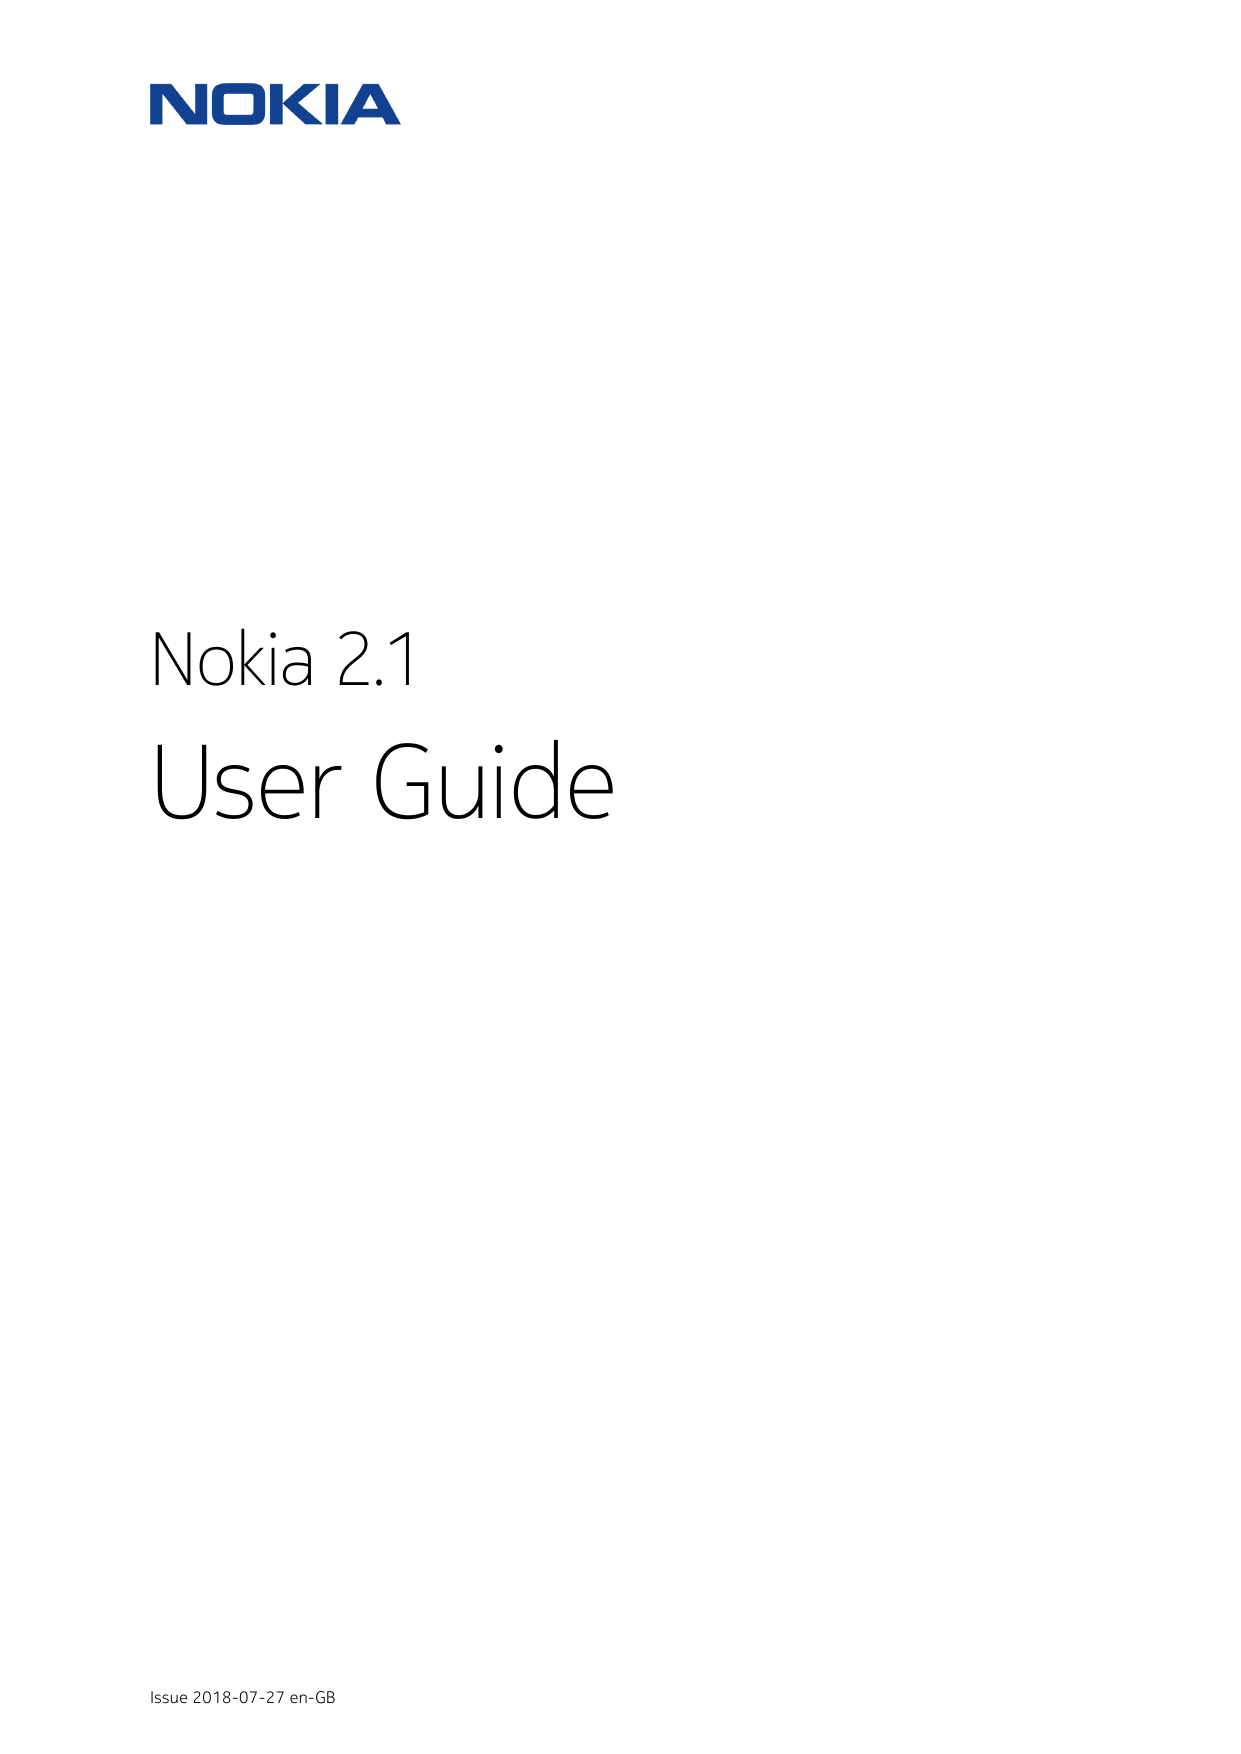 Nokia 2.1User GuideIssue 2018-07-27 en-GB